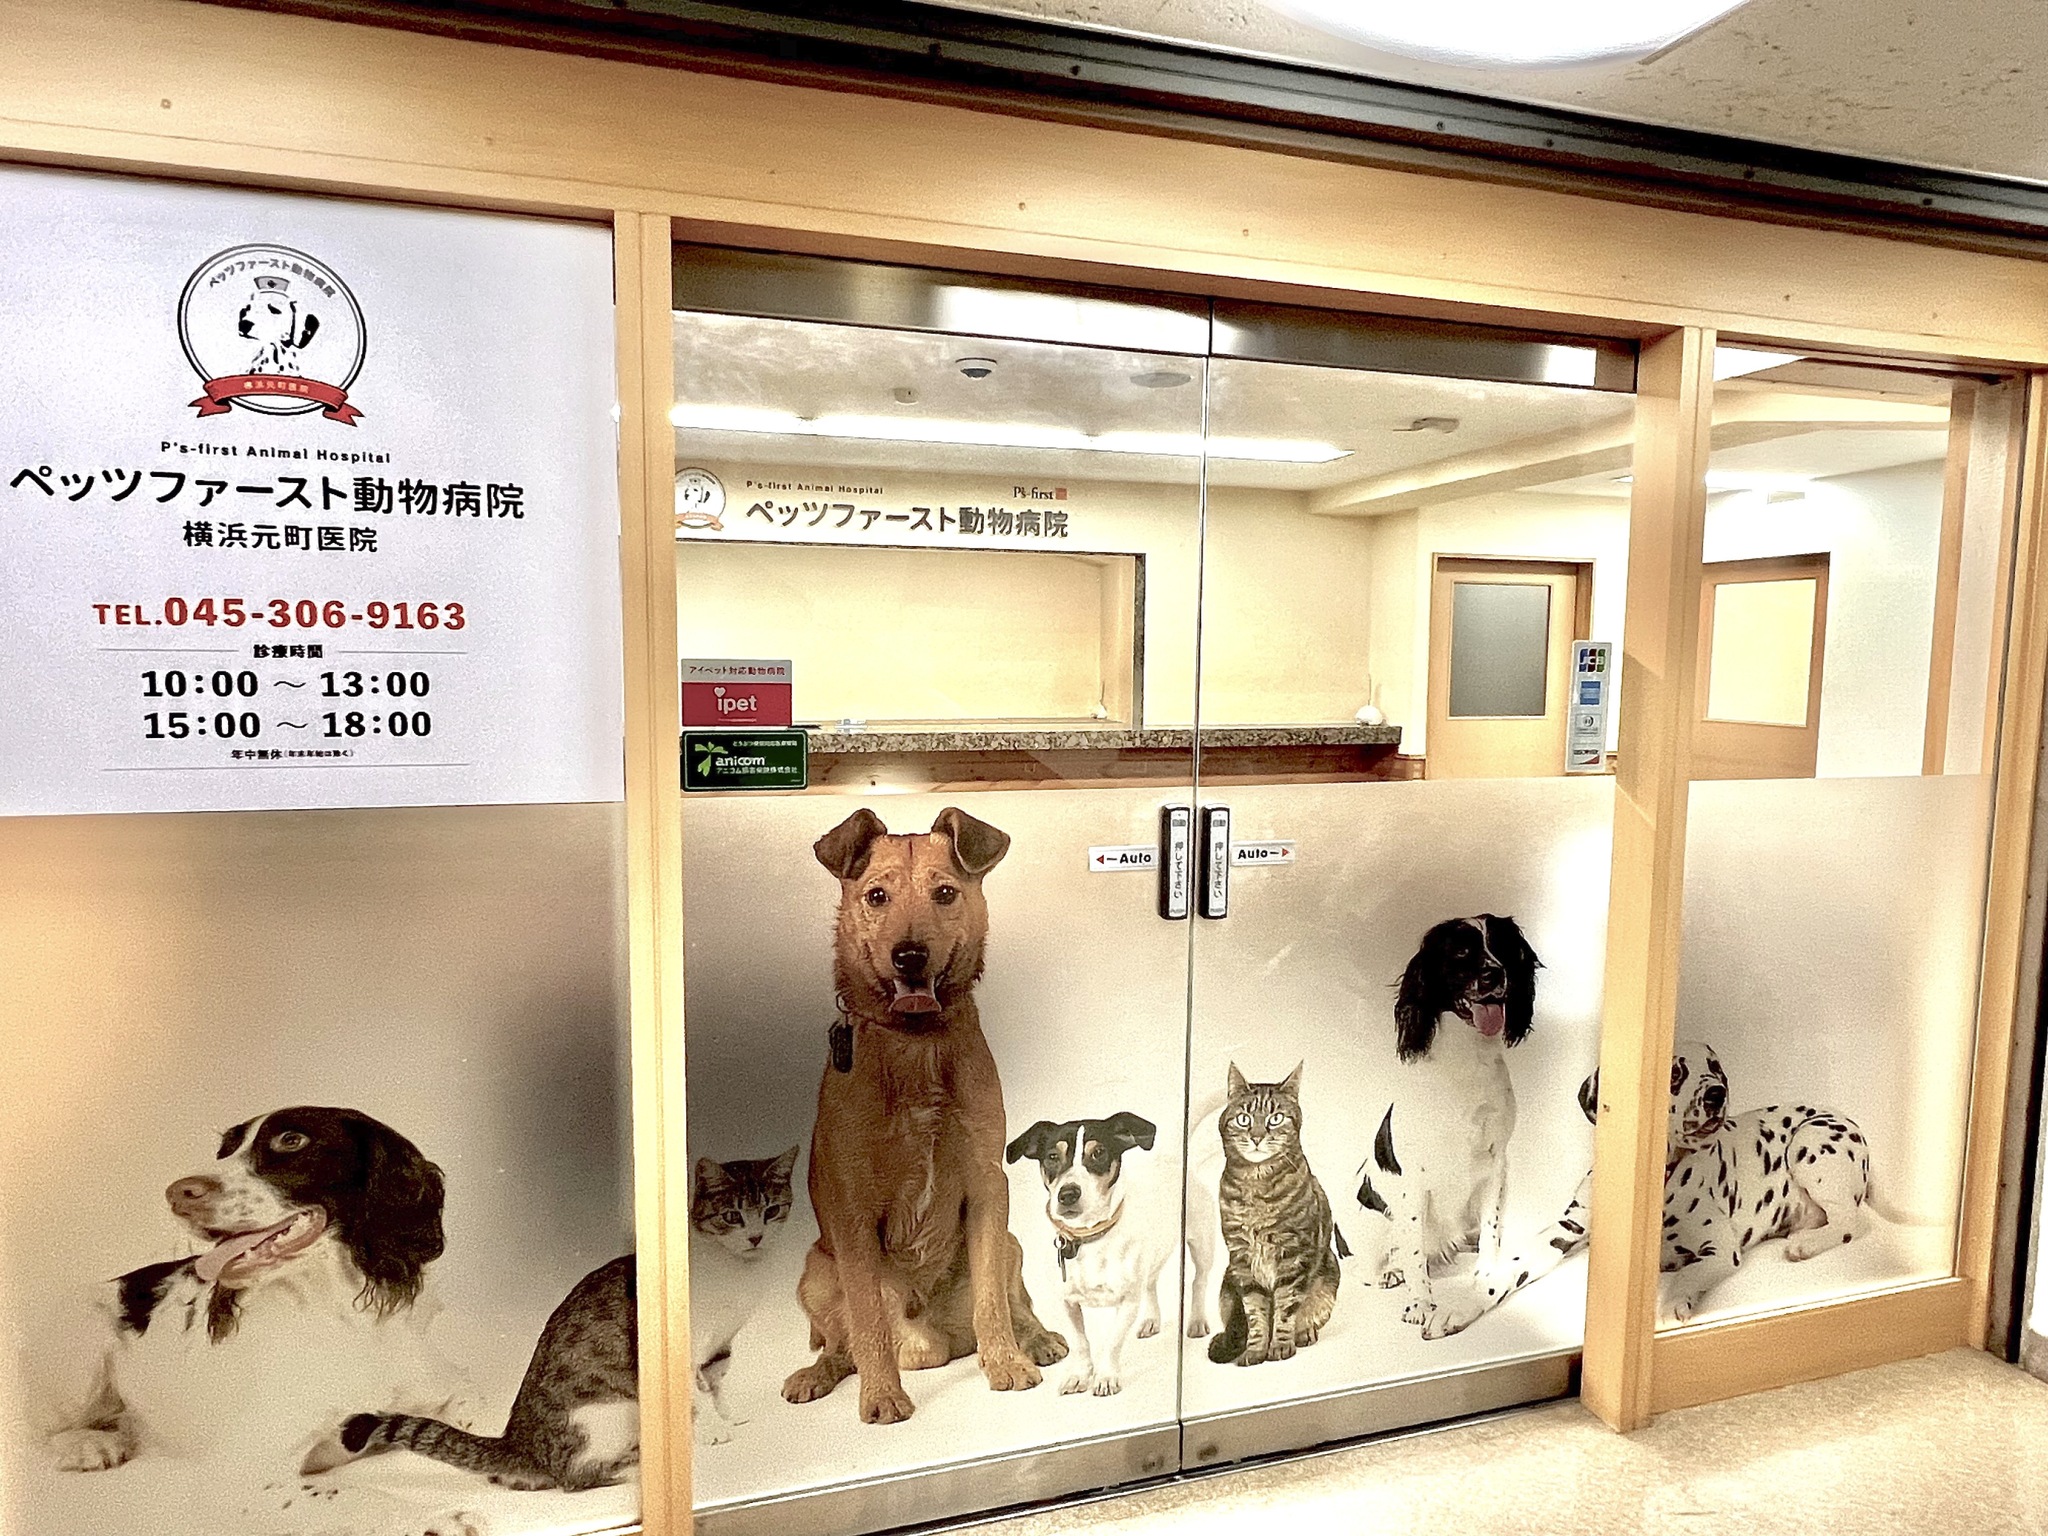 Petsfirst Animal Hospital Yokohama Motomachi Clinic